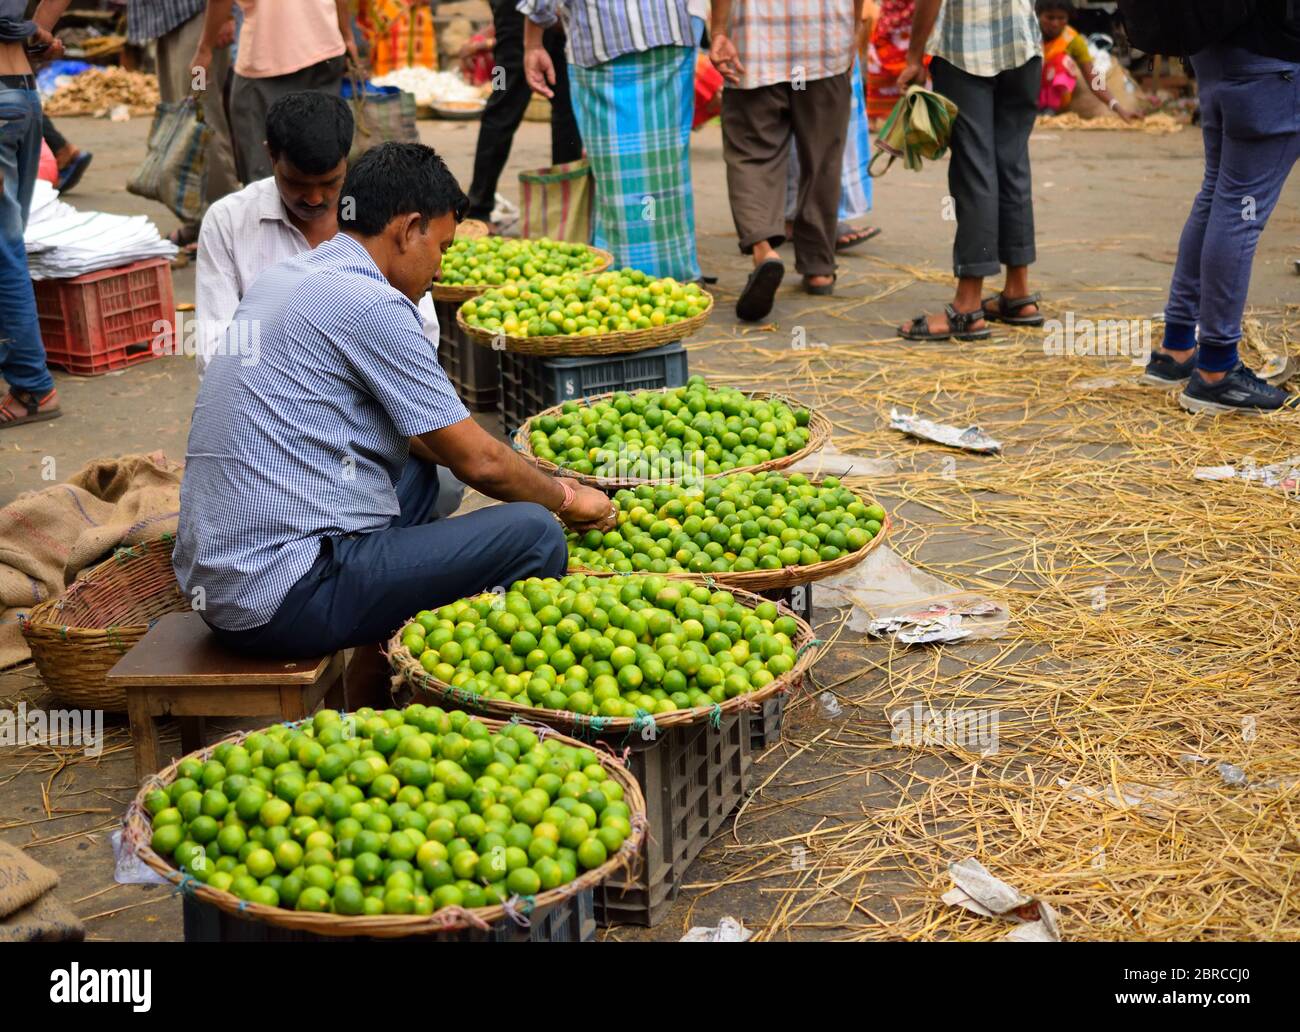 A street vendor selling lemon in the market. Stock Photo